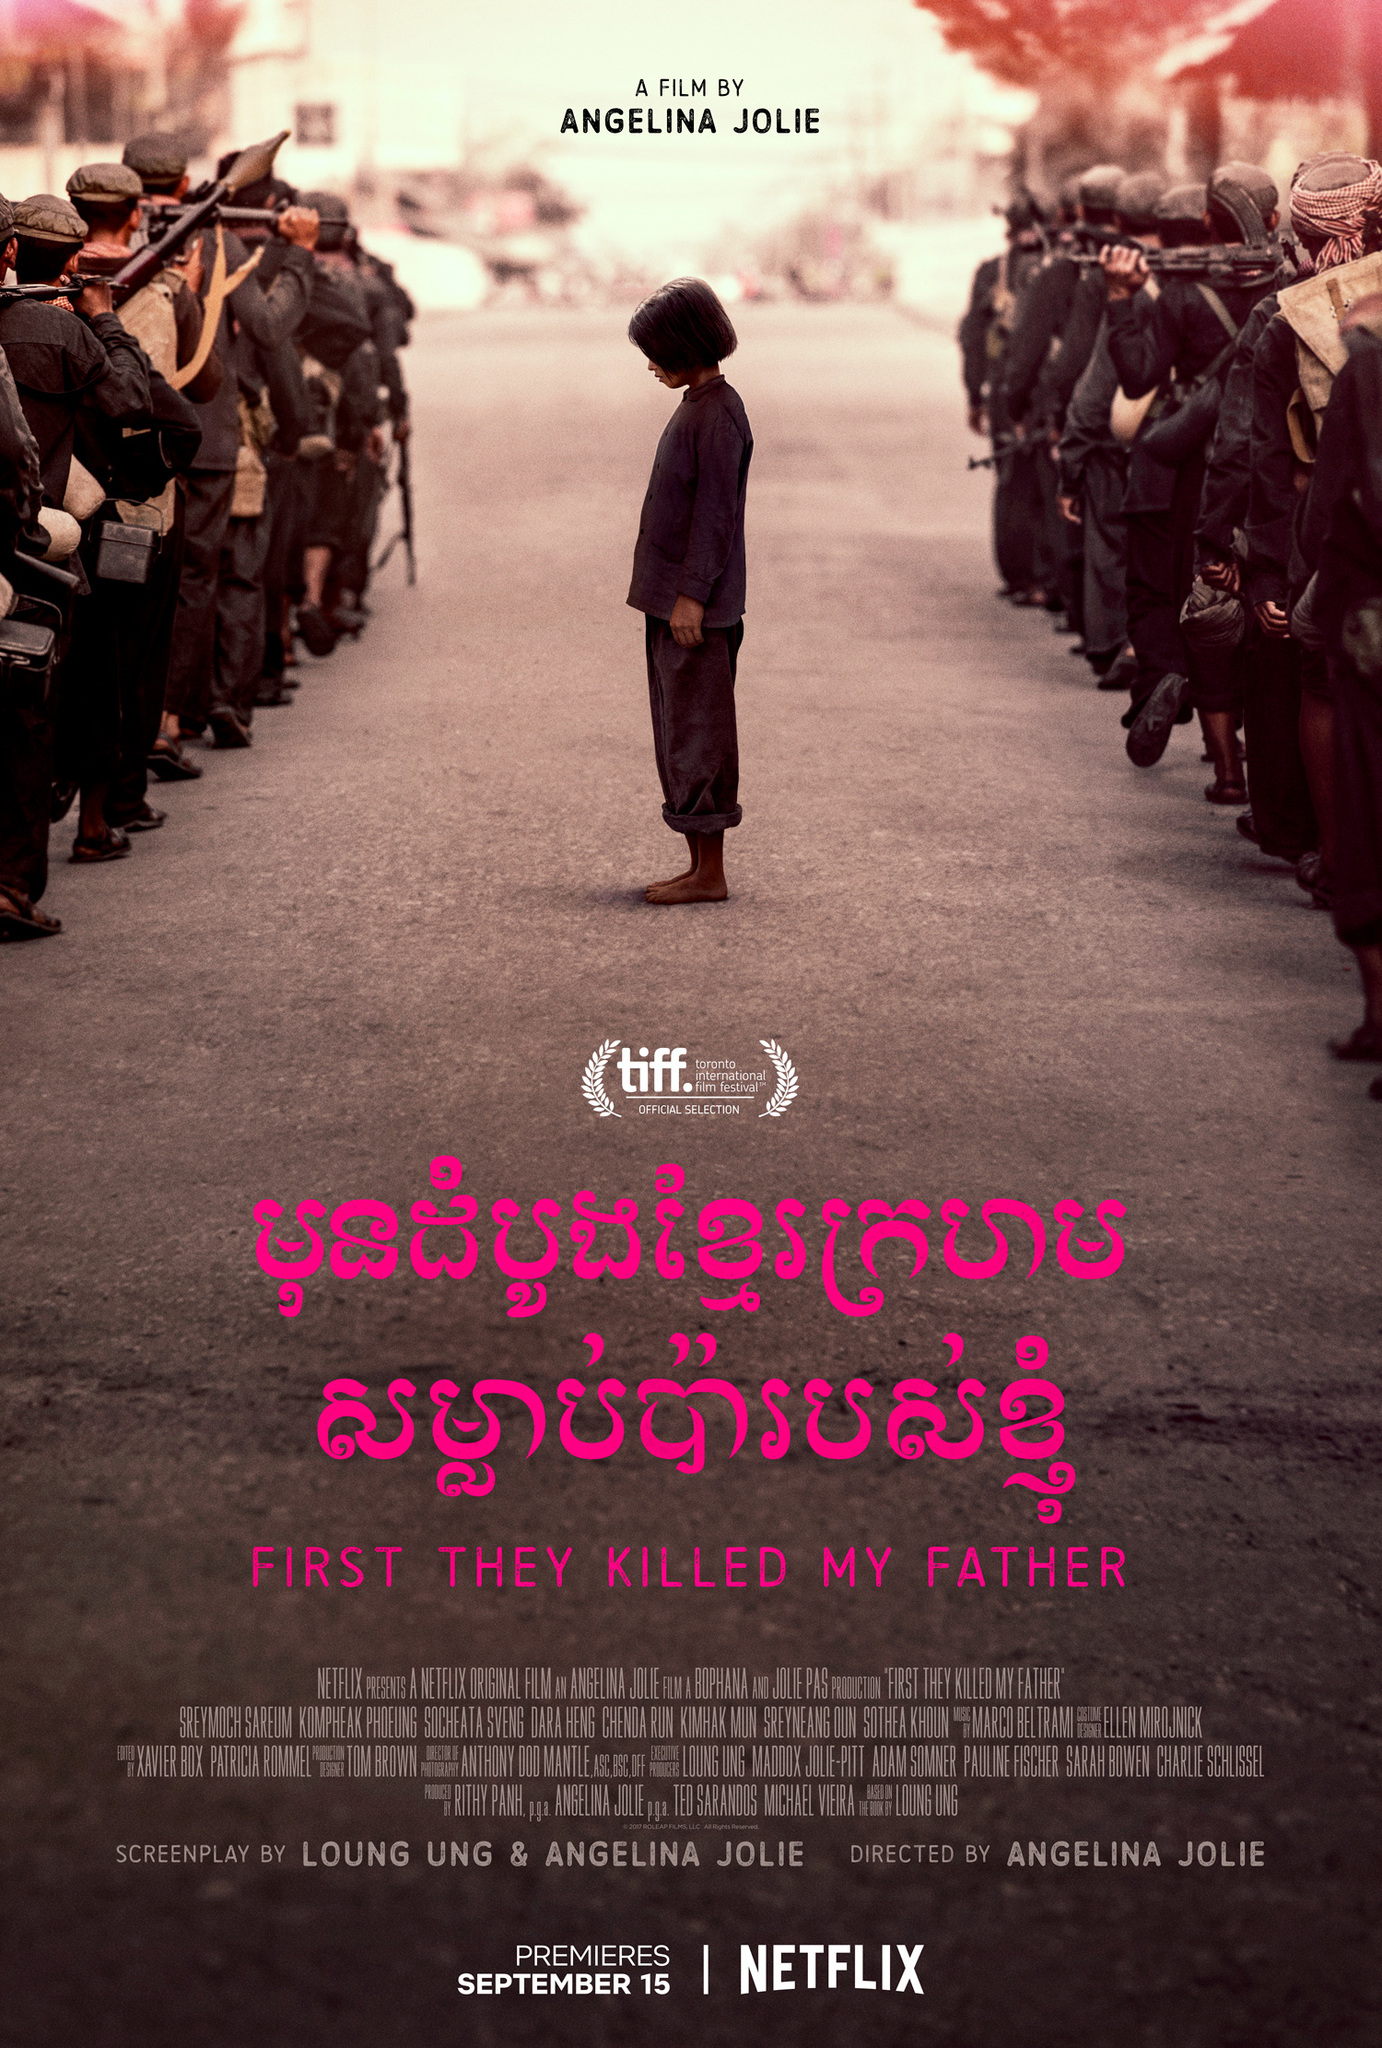 Nonton film First They Killed My Father layarkaca21 indoxx1 ganool online streaming terbaru